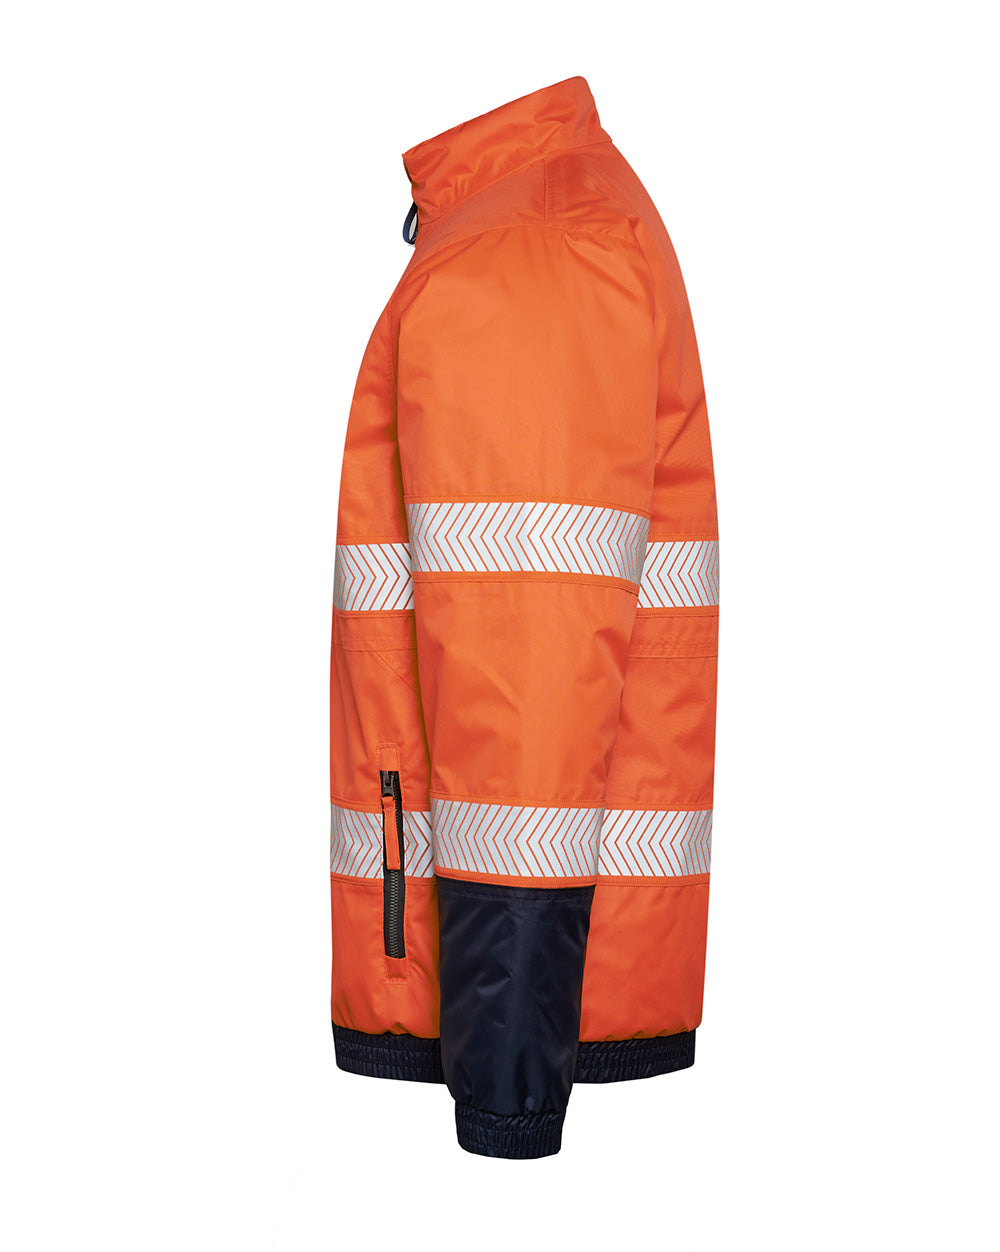 Cahill Hi-Vis Jacket in Fluoro Orange & Navy